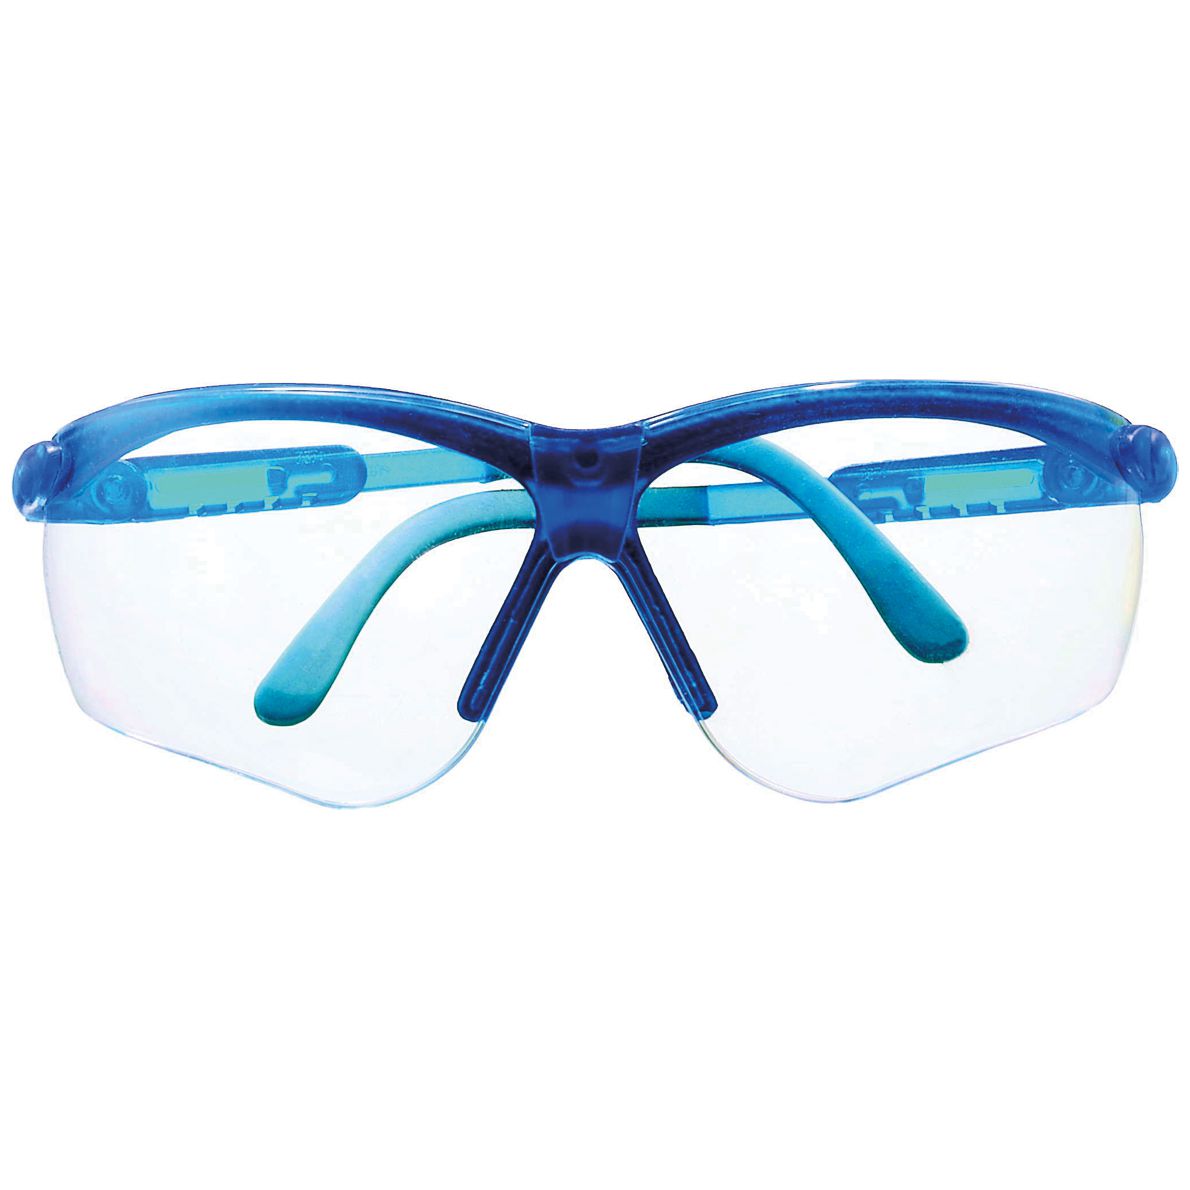 MSA Perspecta 010 Schutzbrille - kratz- & beschlagfest dank Sightgard-Beschichtung - EN 166/170 - Blau/Klar